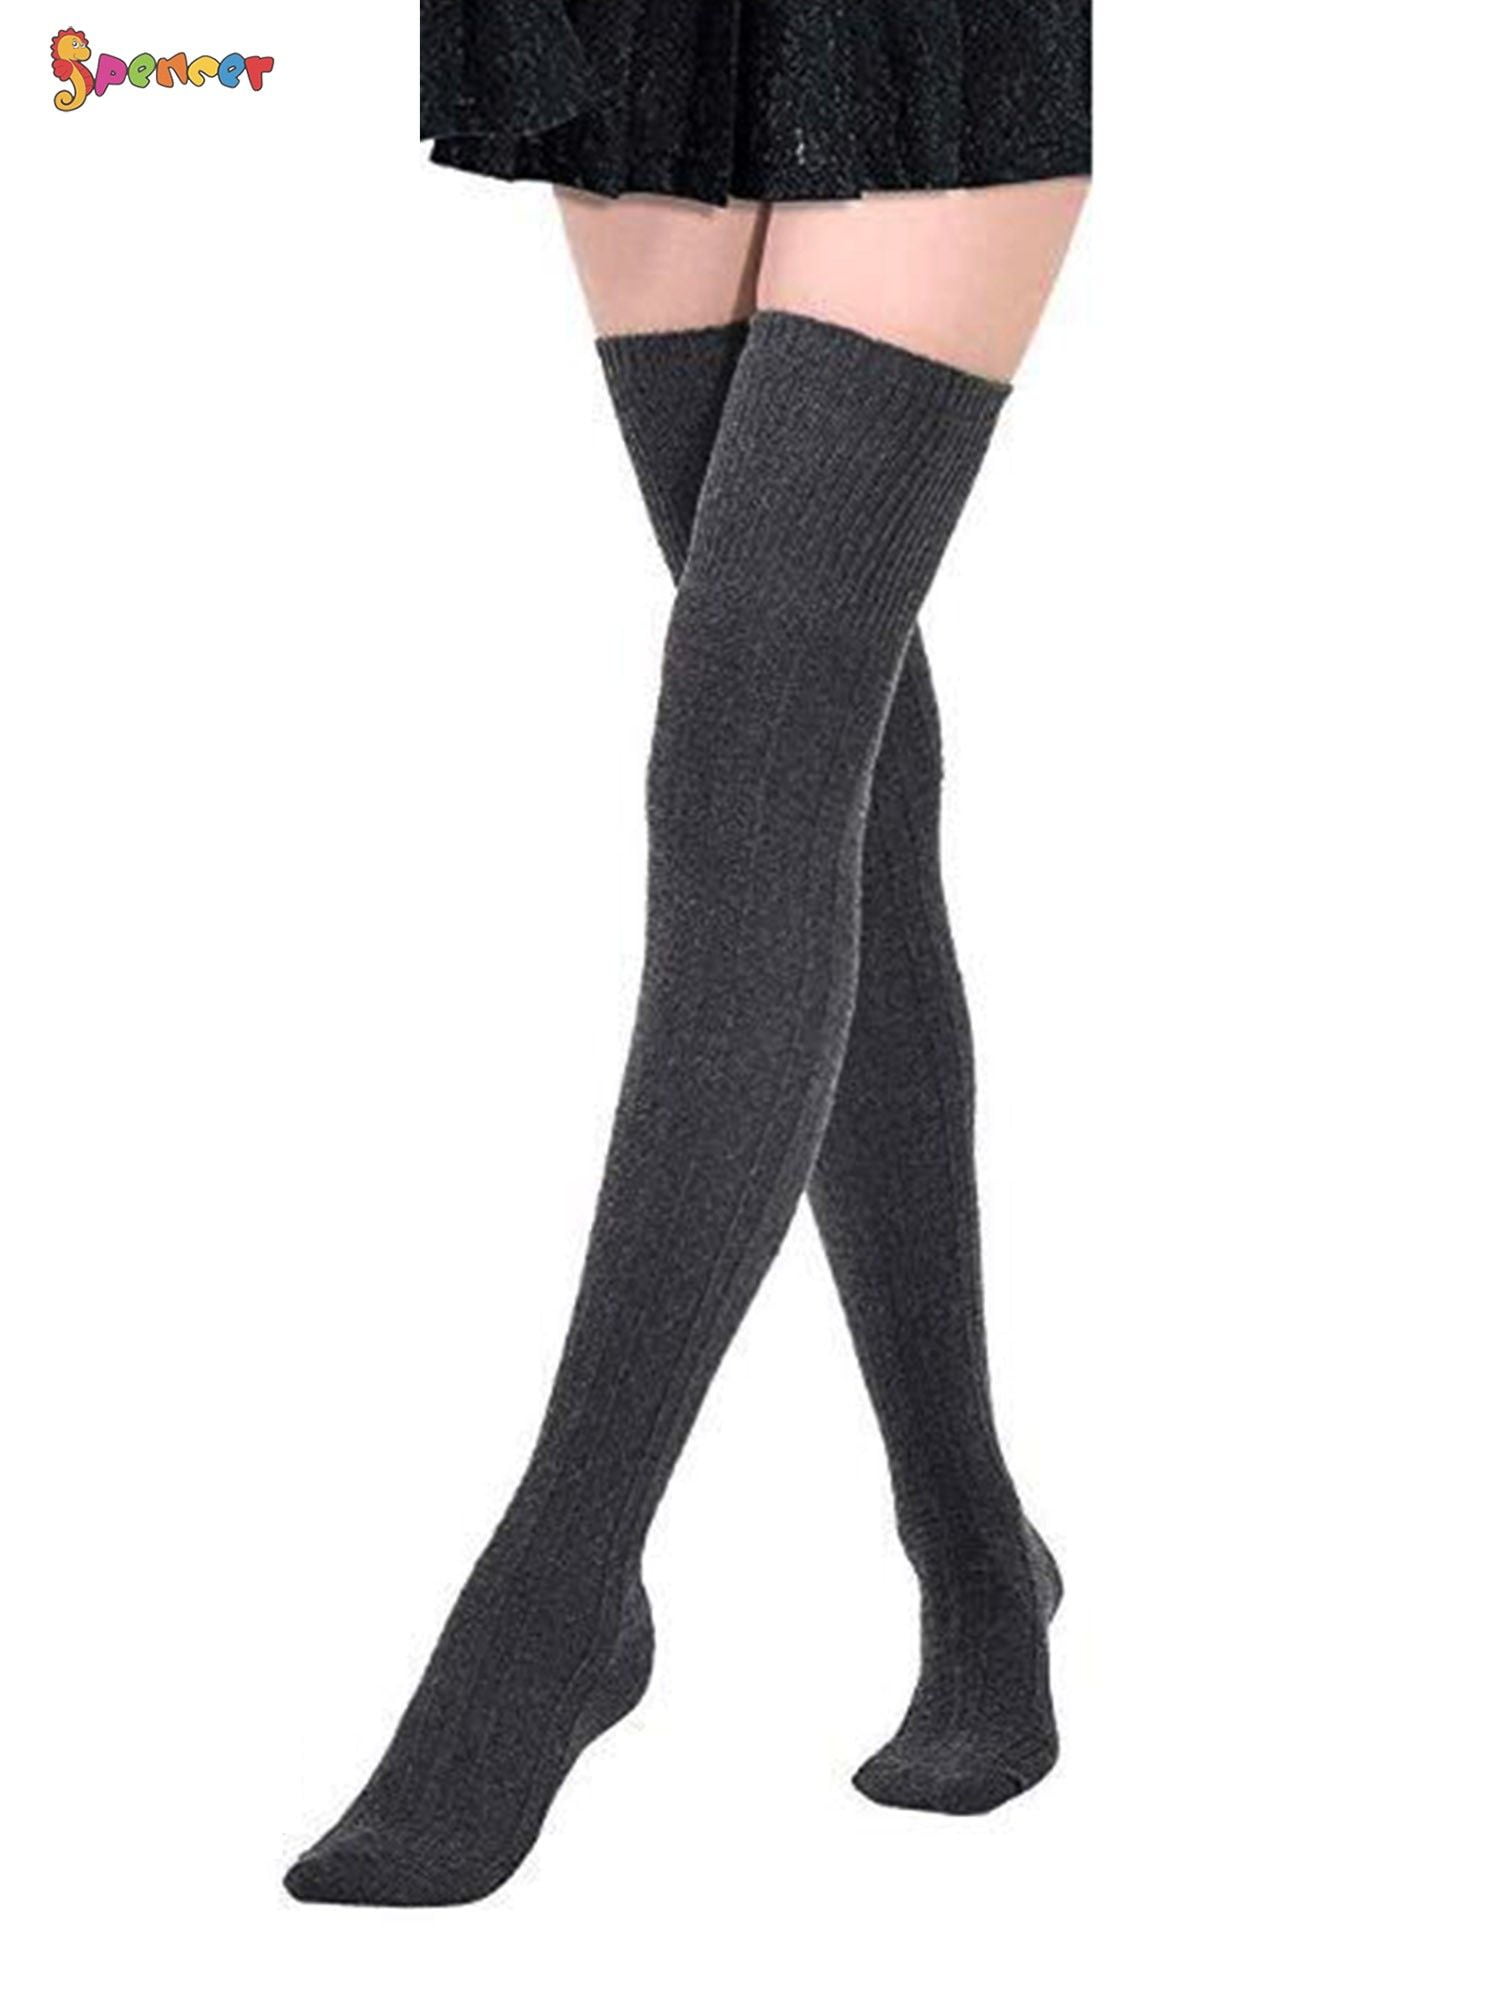 Good Women Long Socks Thigh High Over Knee Slouchy Knitted Crochet Stockings 